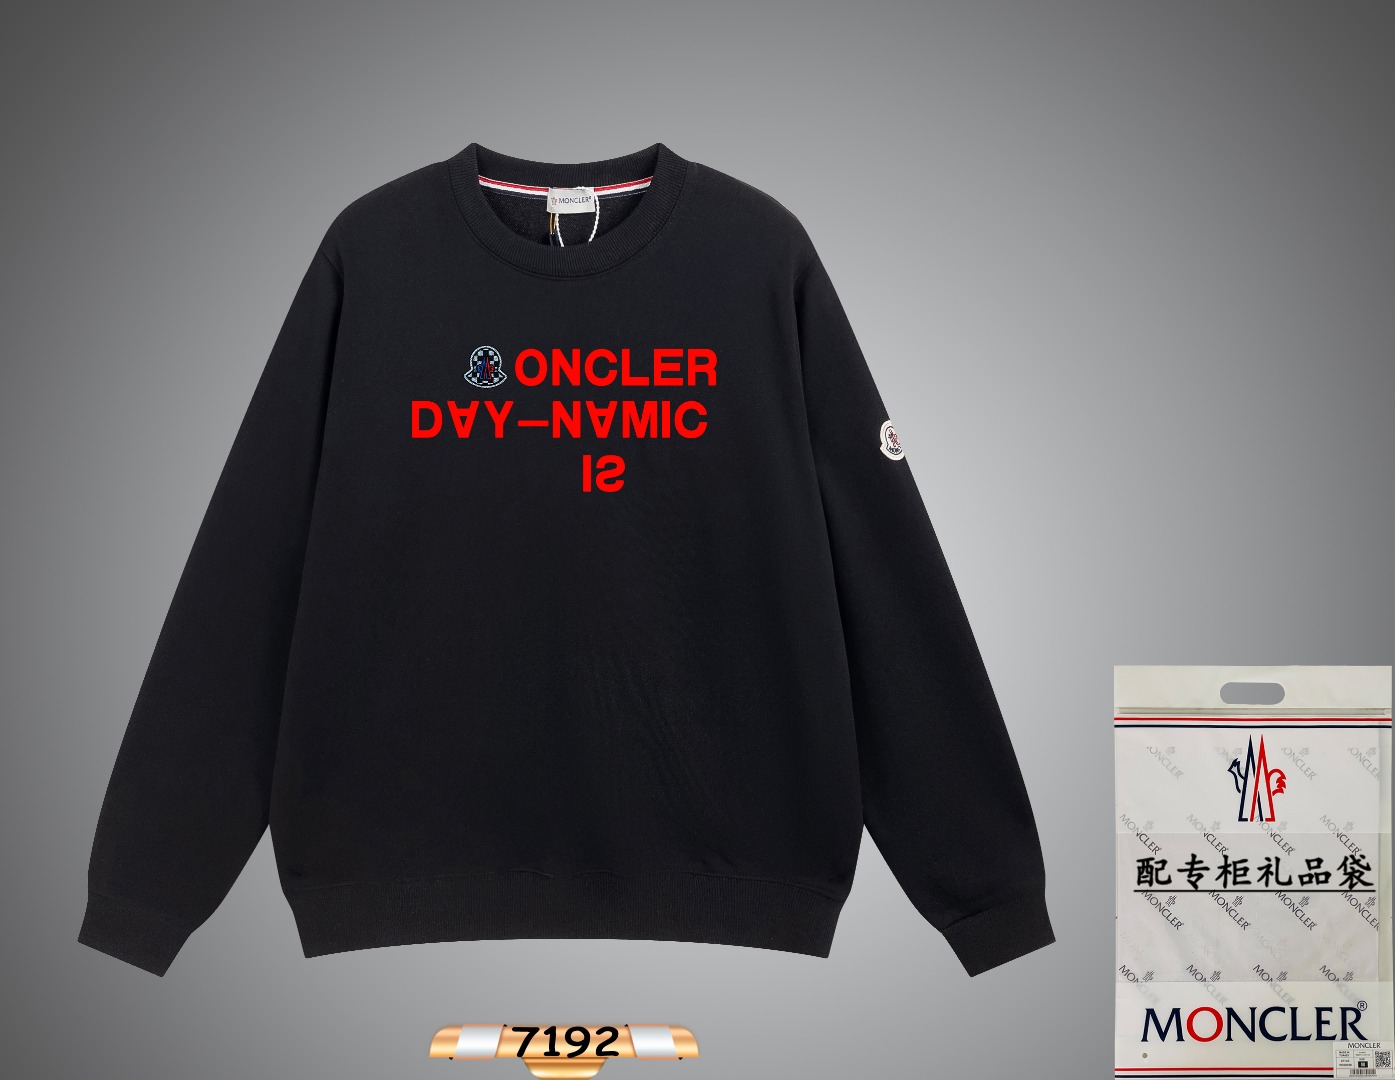 High Quality Online
 Moncler Clothing Sweatshirts Luxury Fake
 Black White Printing Unisex Fall/Winter Collection Fashion